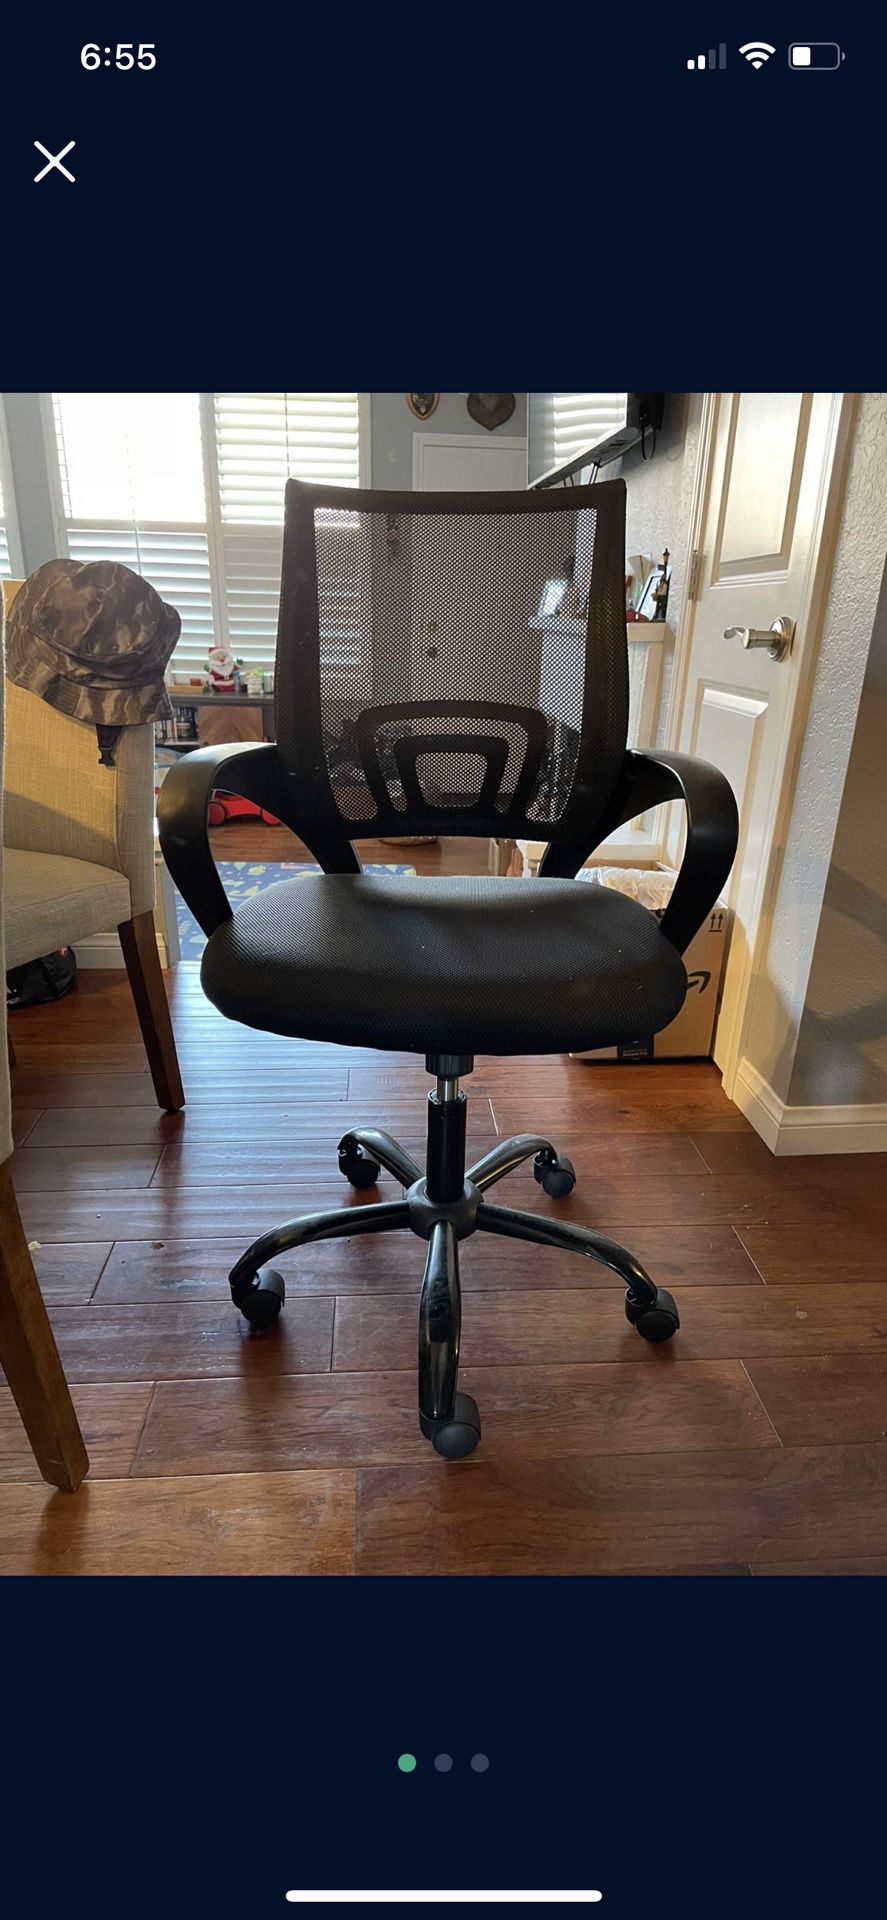 Black Office Ergonomic Chair From Amazon 